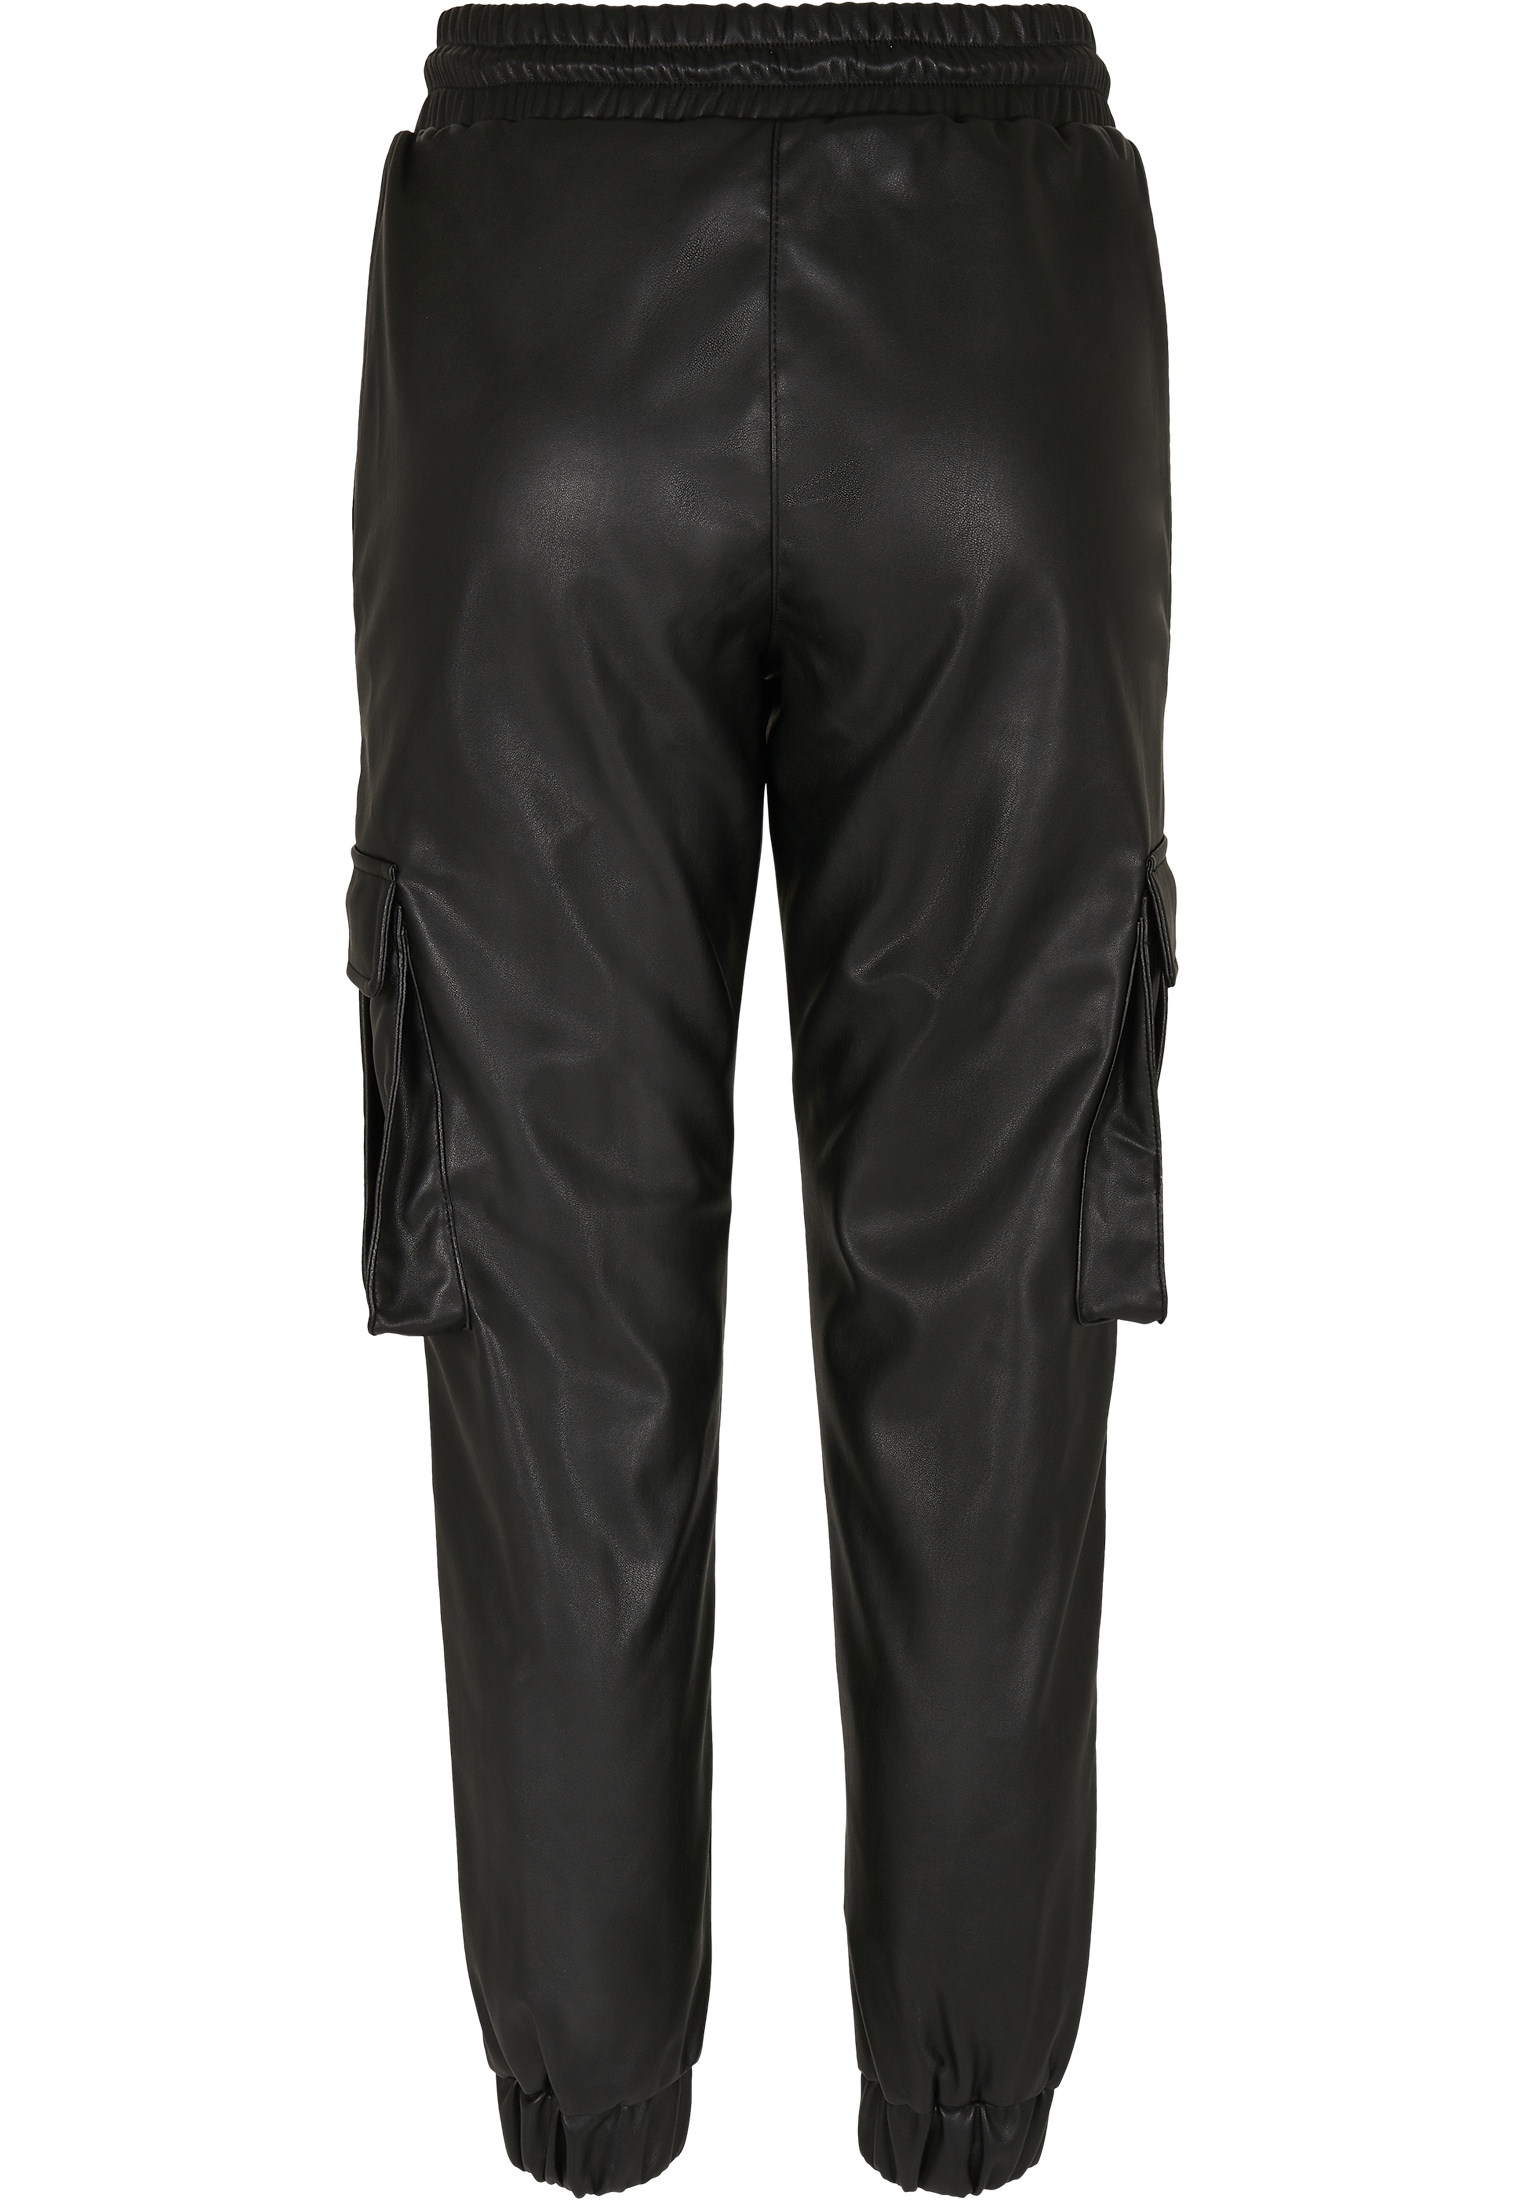 »Damen Leather für Cargohose Ladies CLASSICS | (1 URBAN tlg.) Cargo Faux kaufen Pants«, BAUR